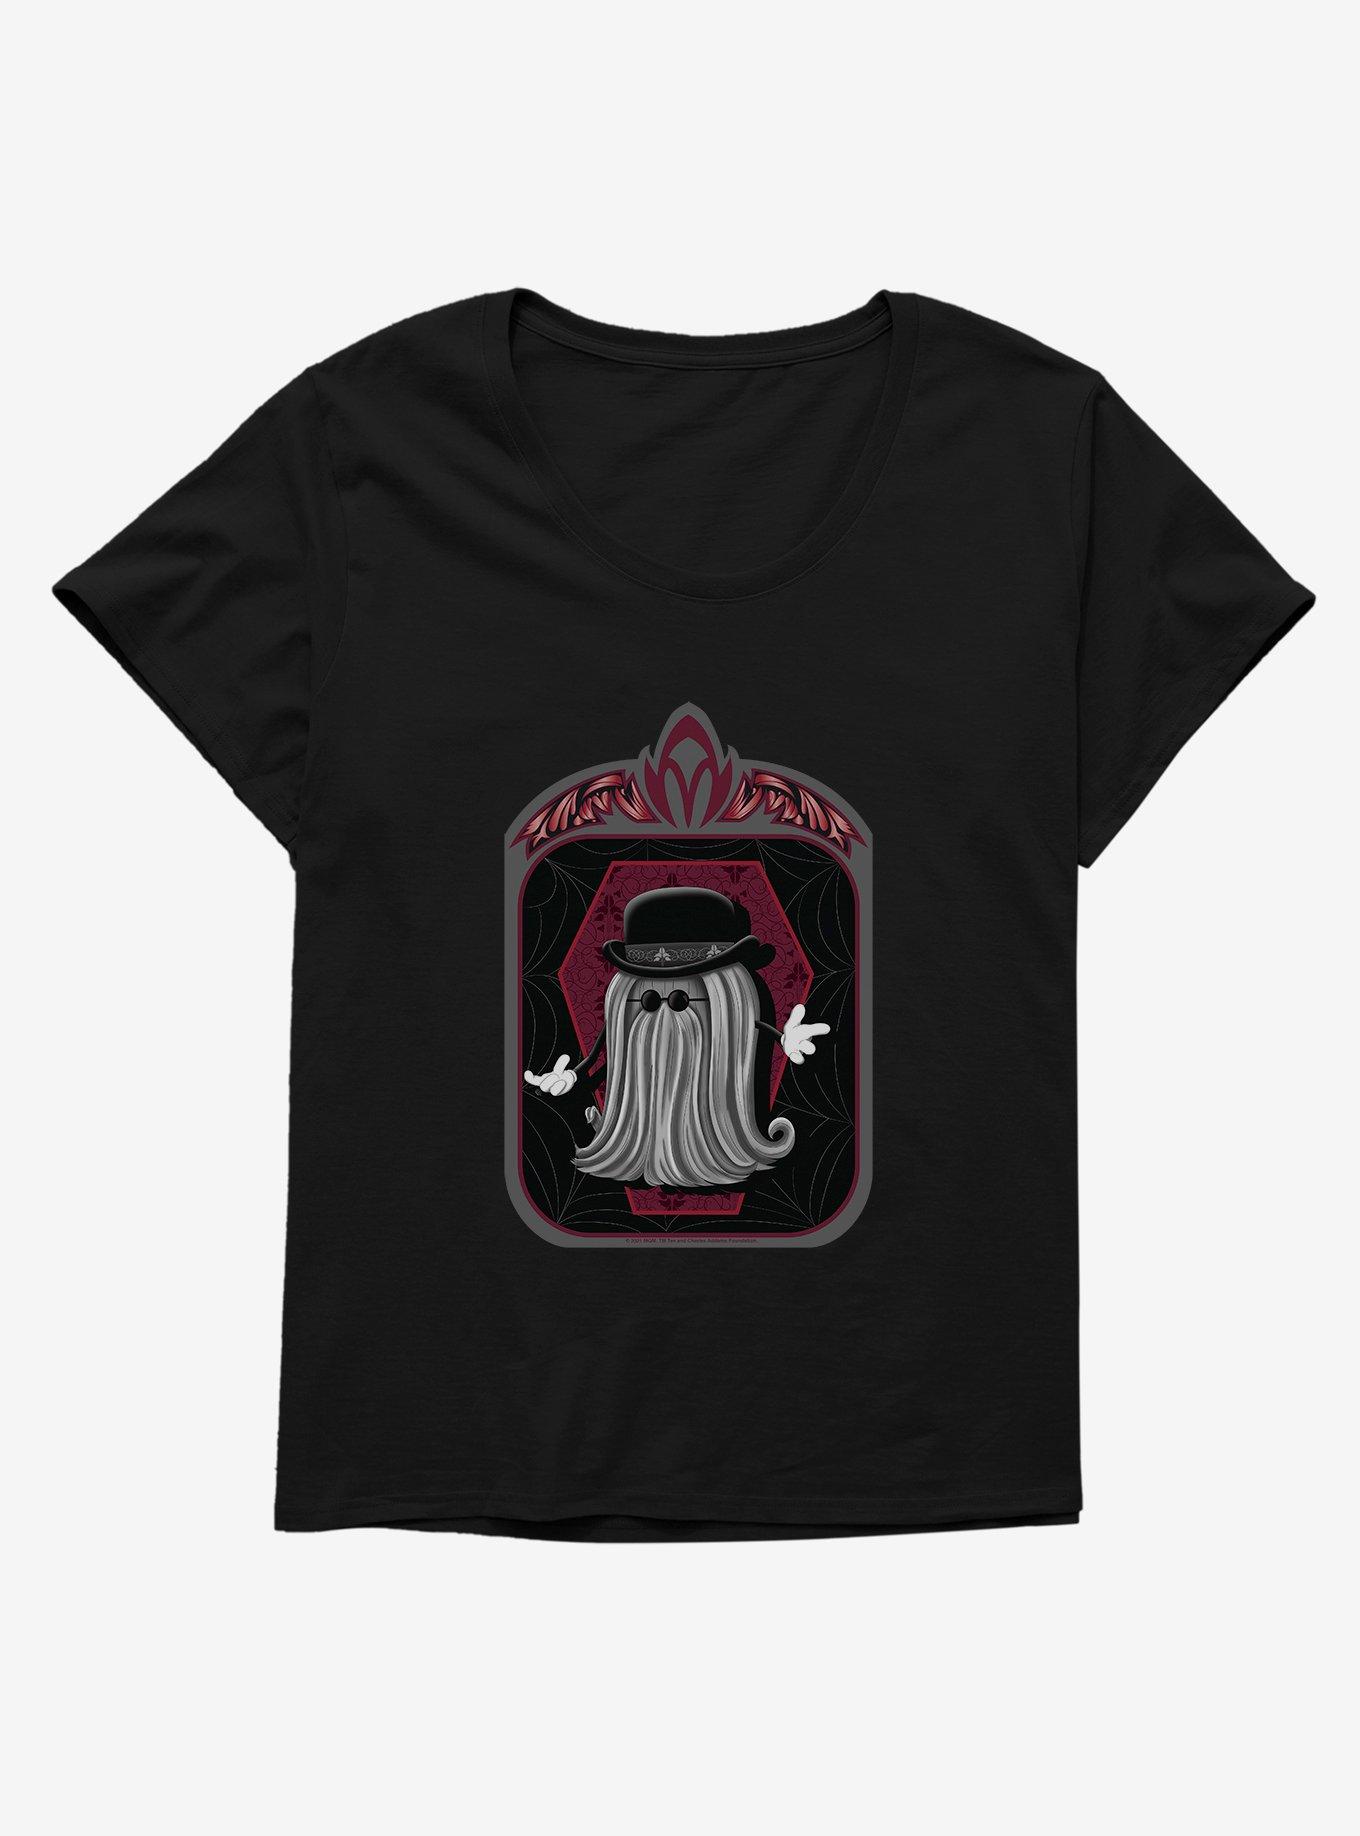 The Addams Family 2 Cousin Itt Girls T-Shirt Plus